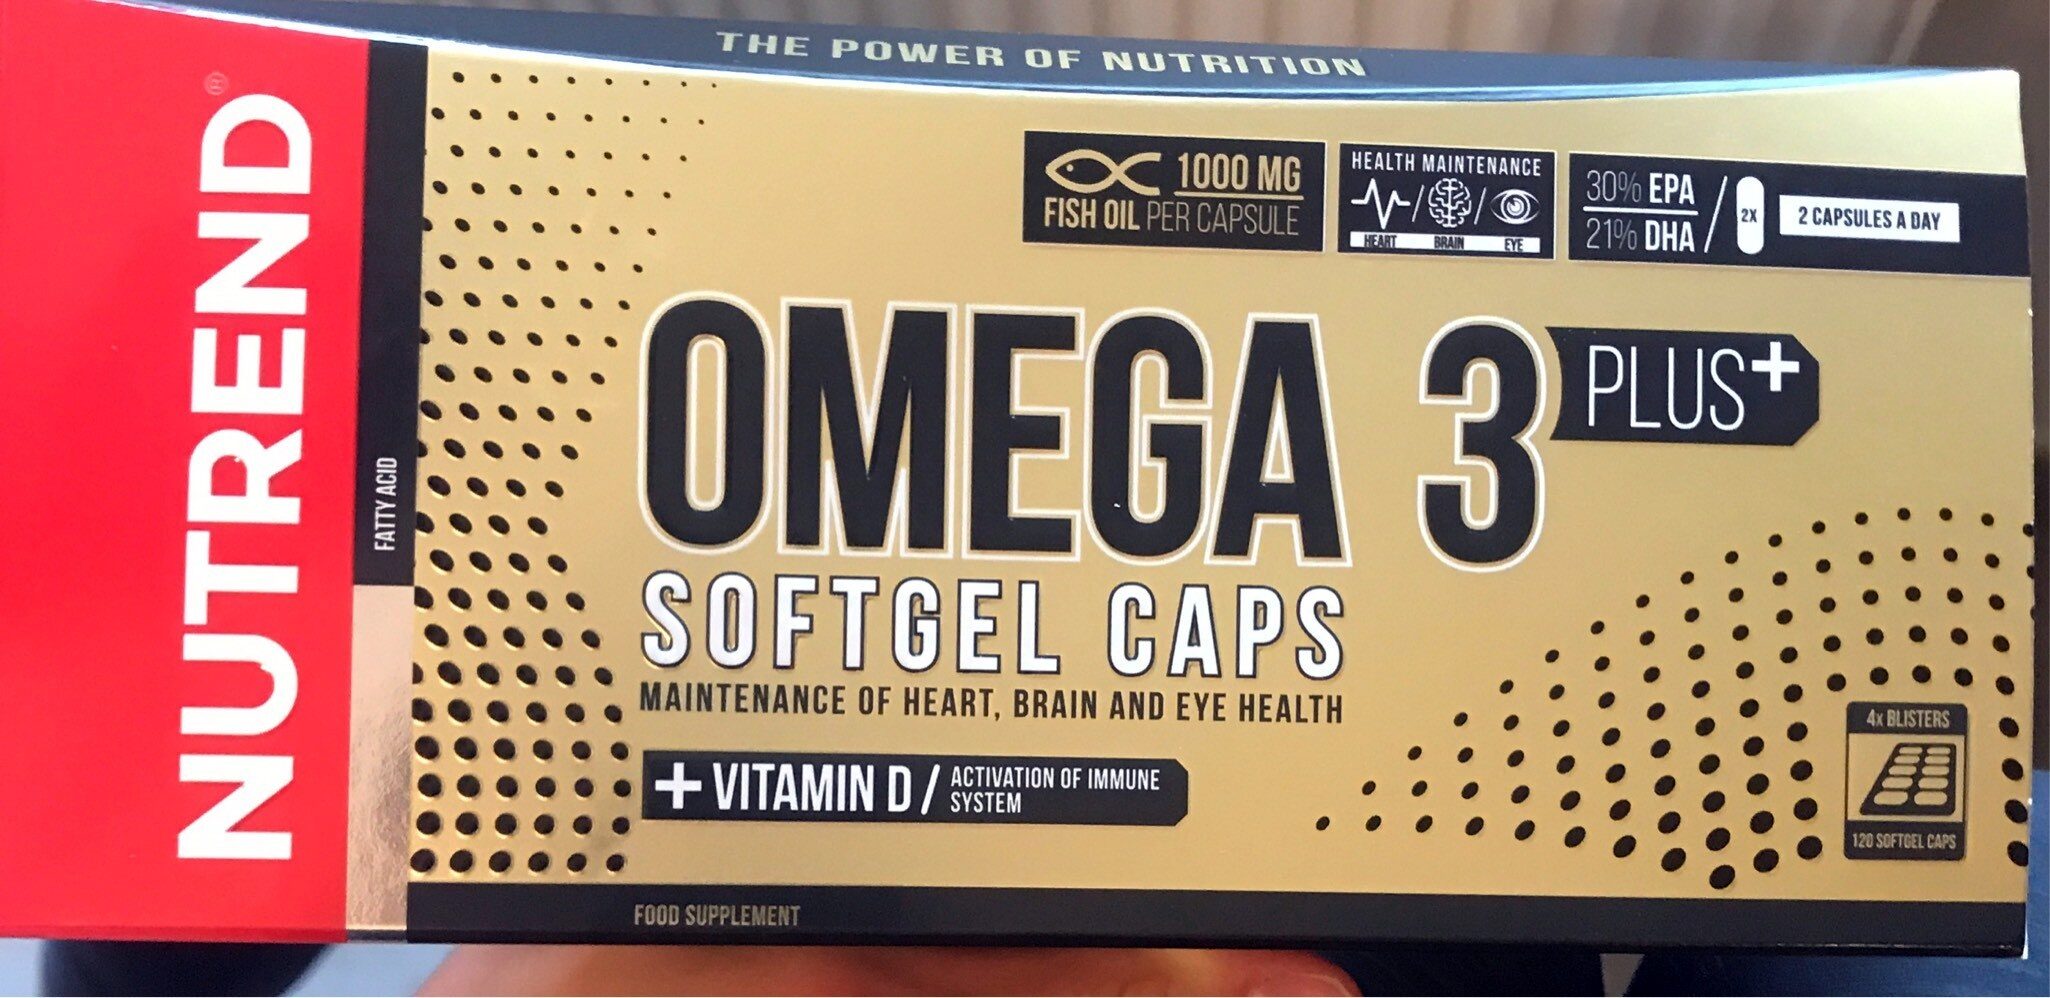 Omega 3 Plus Softgel Caps - Produkt